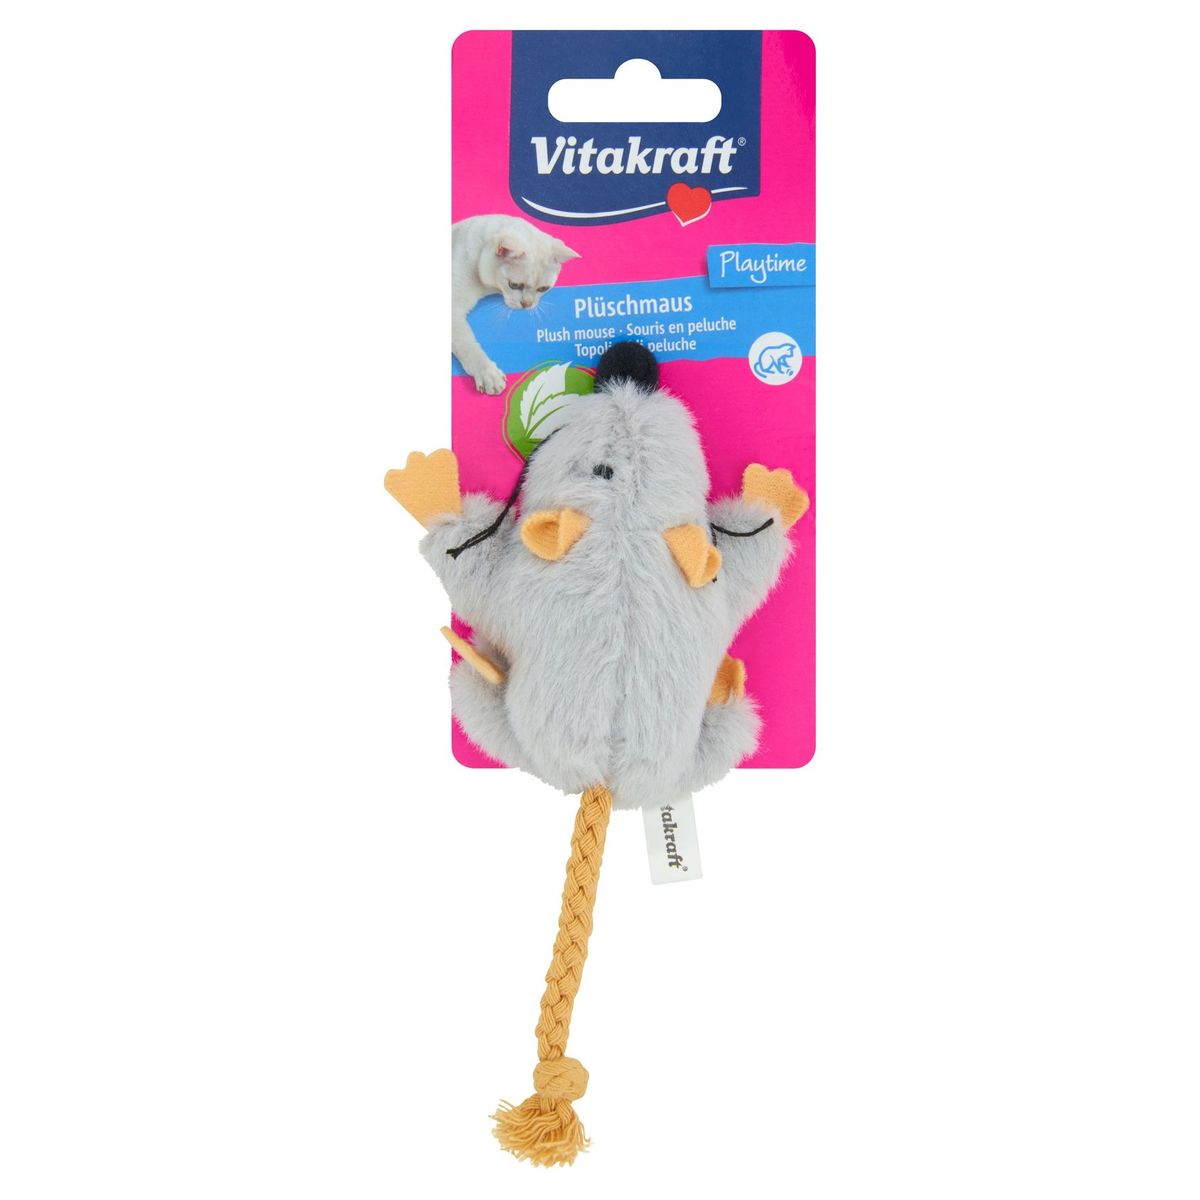 Vitakraft Playtime Plush Mouse